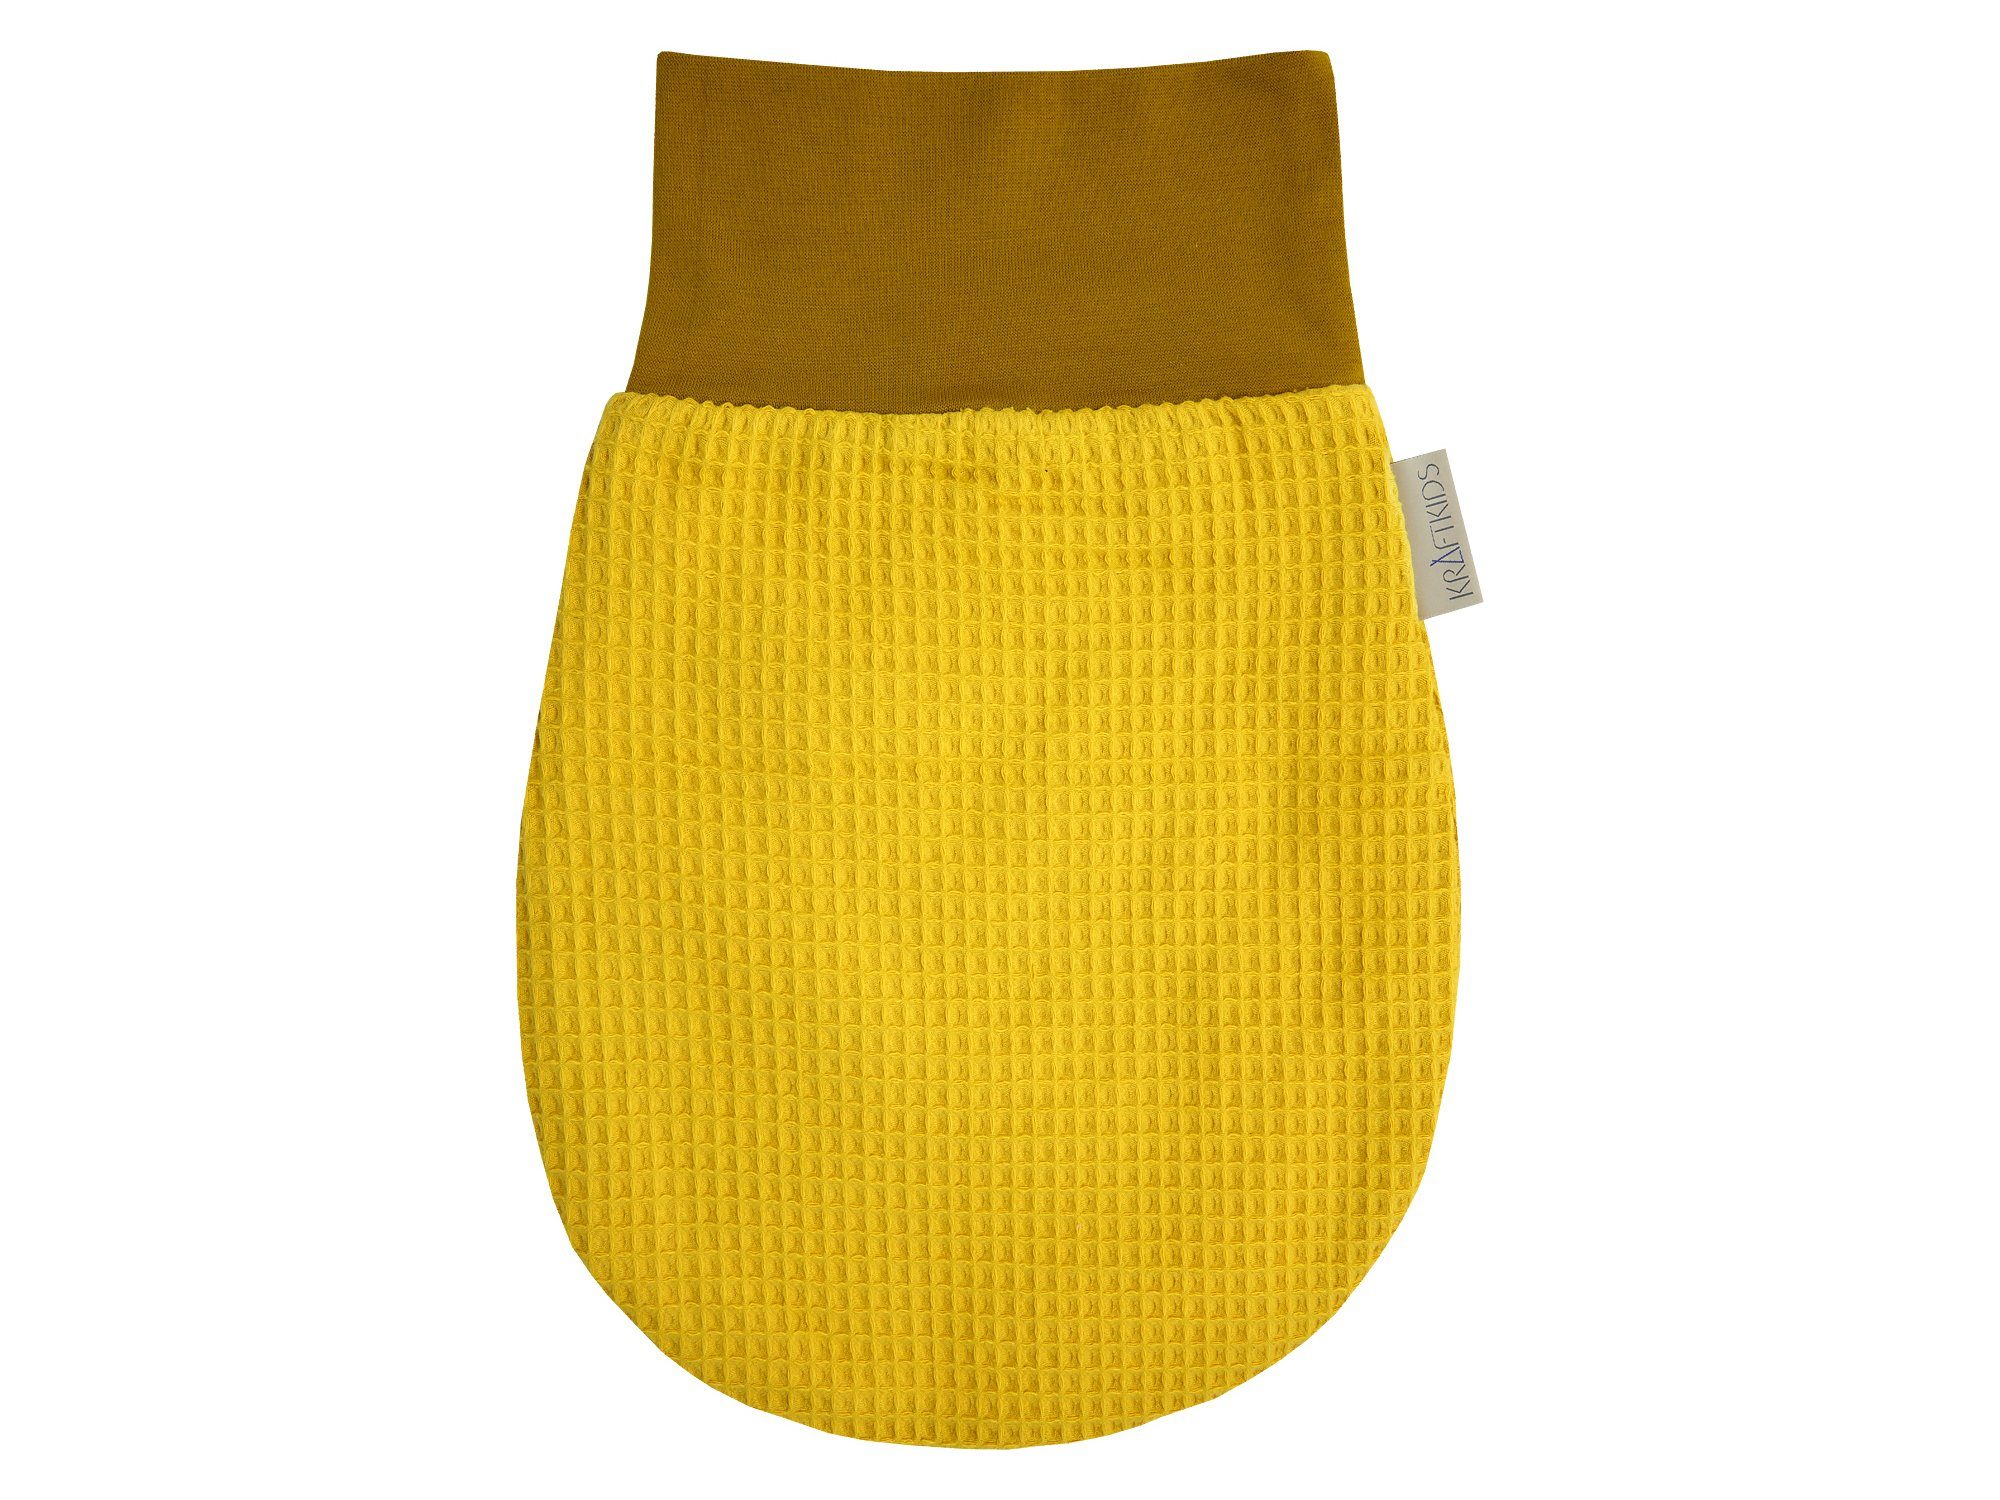 Kinder Mädchen (Gr. 50 - 92) KraftKids Babyschlafsack Waffel Piqué mustard, Sommer/Frühling-Variante, 100% Baumwolle, hochwärtig